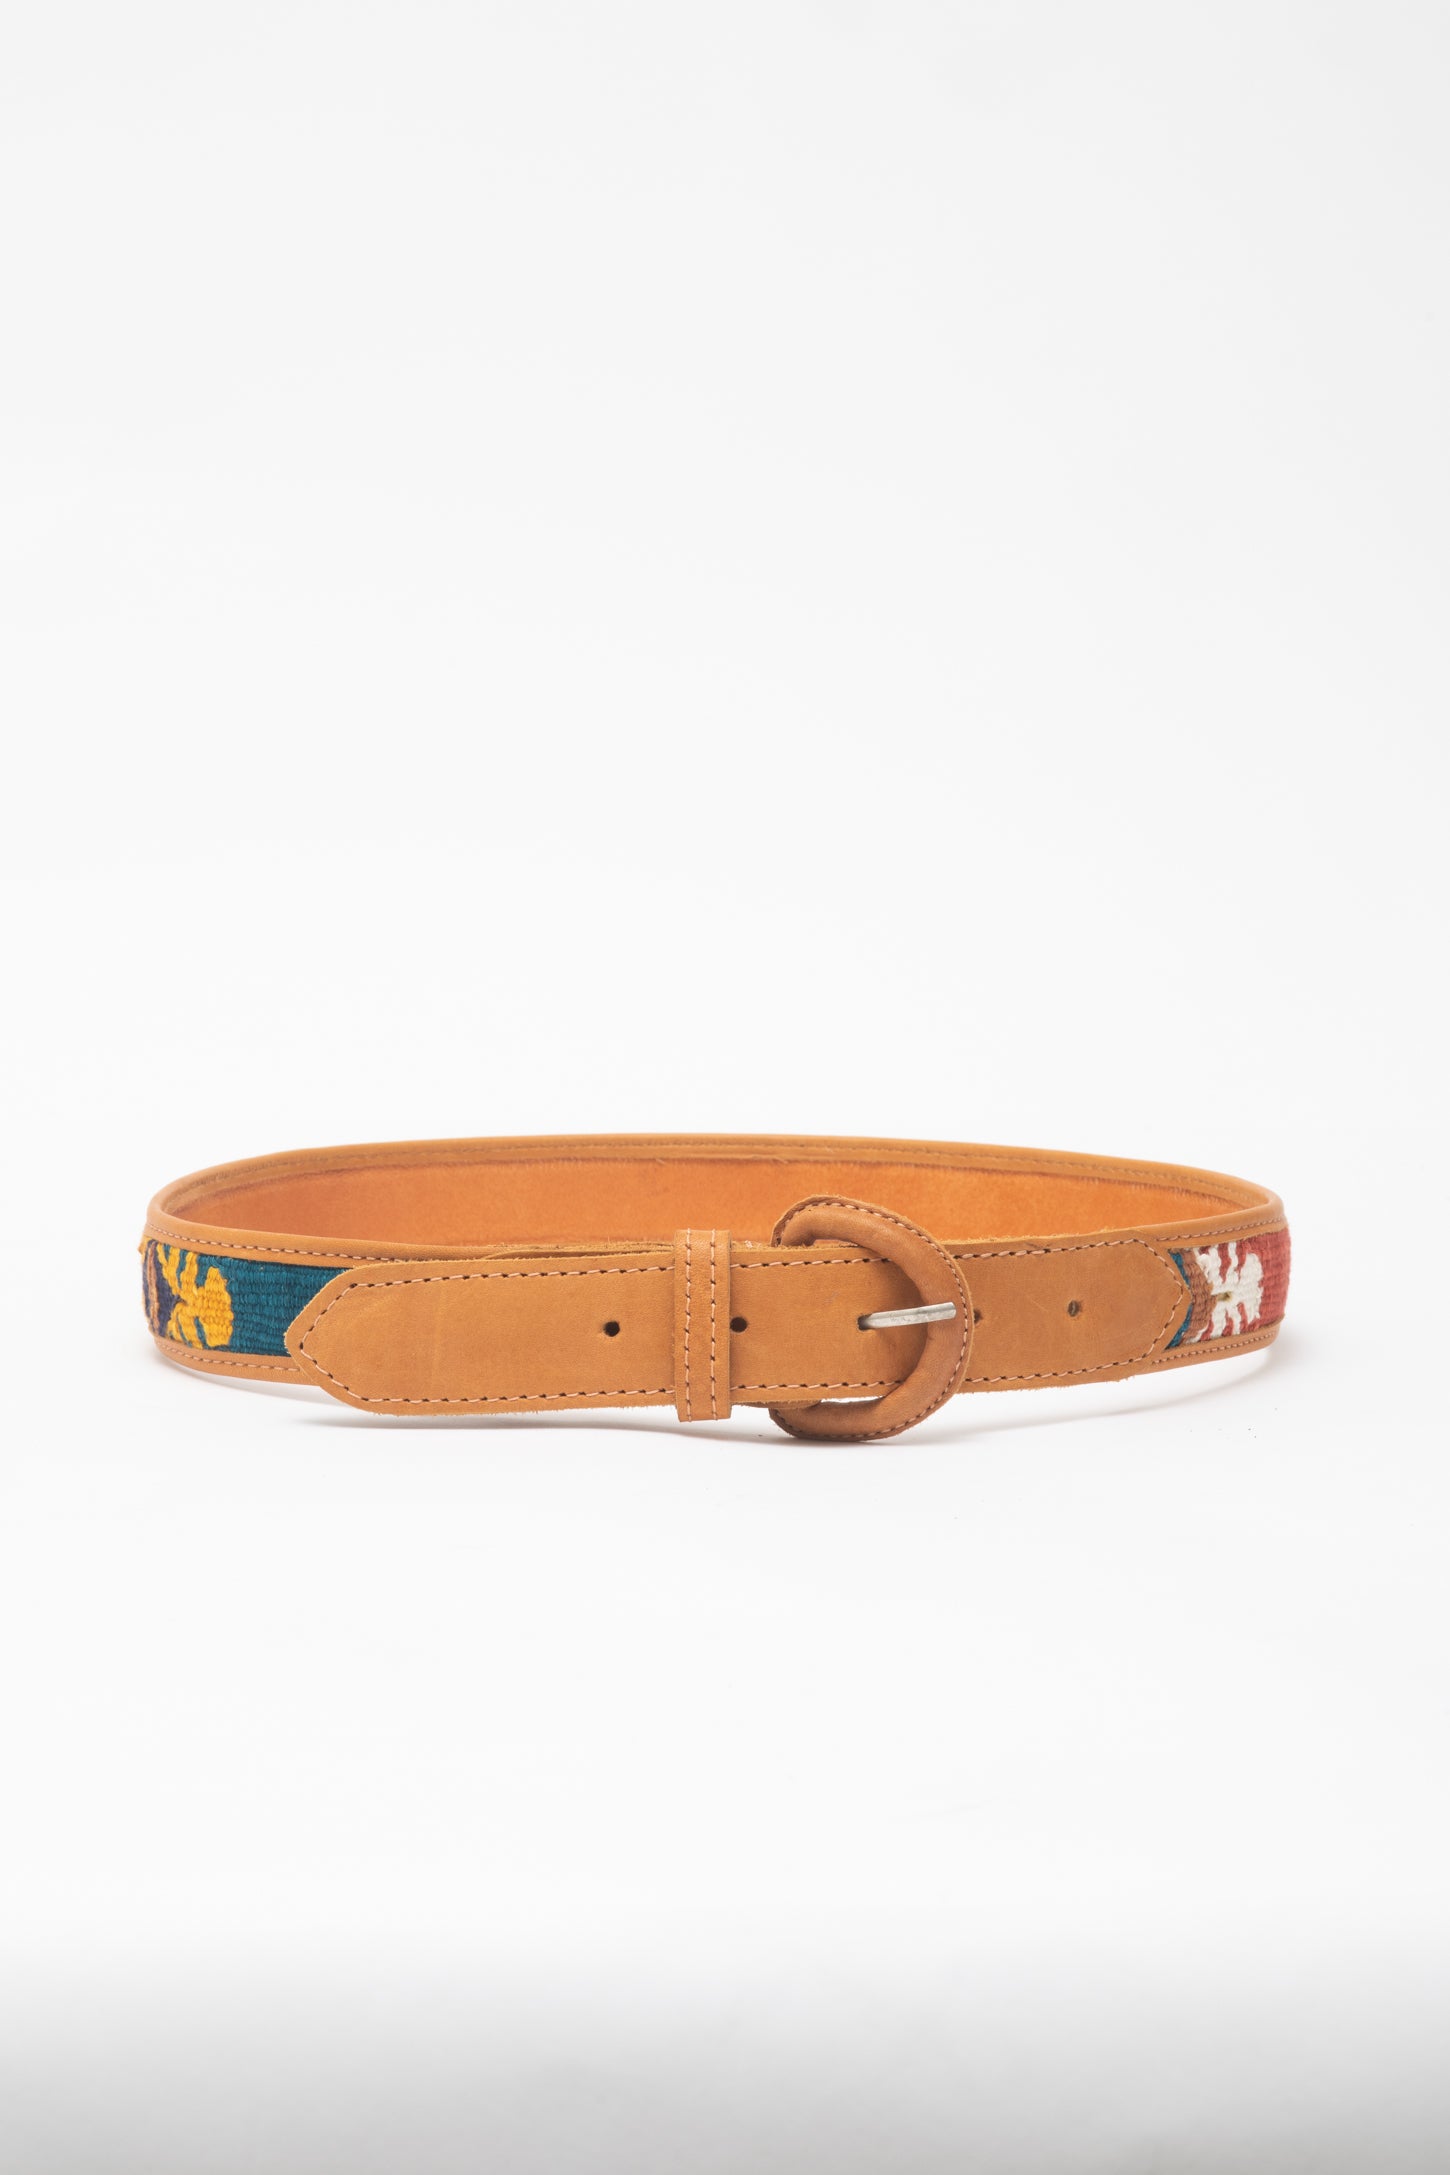 Tierra Handmade Leather Belt